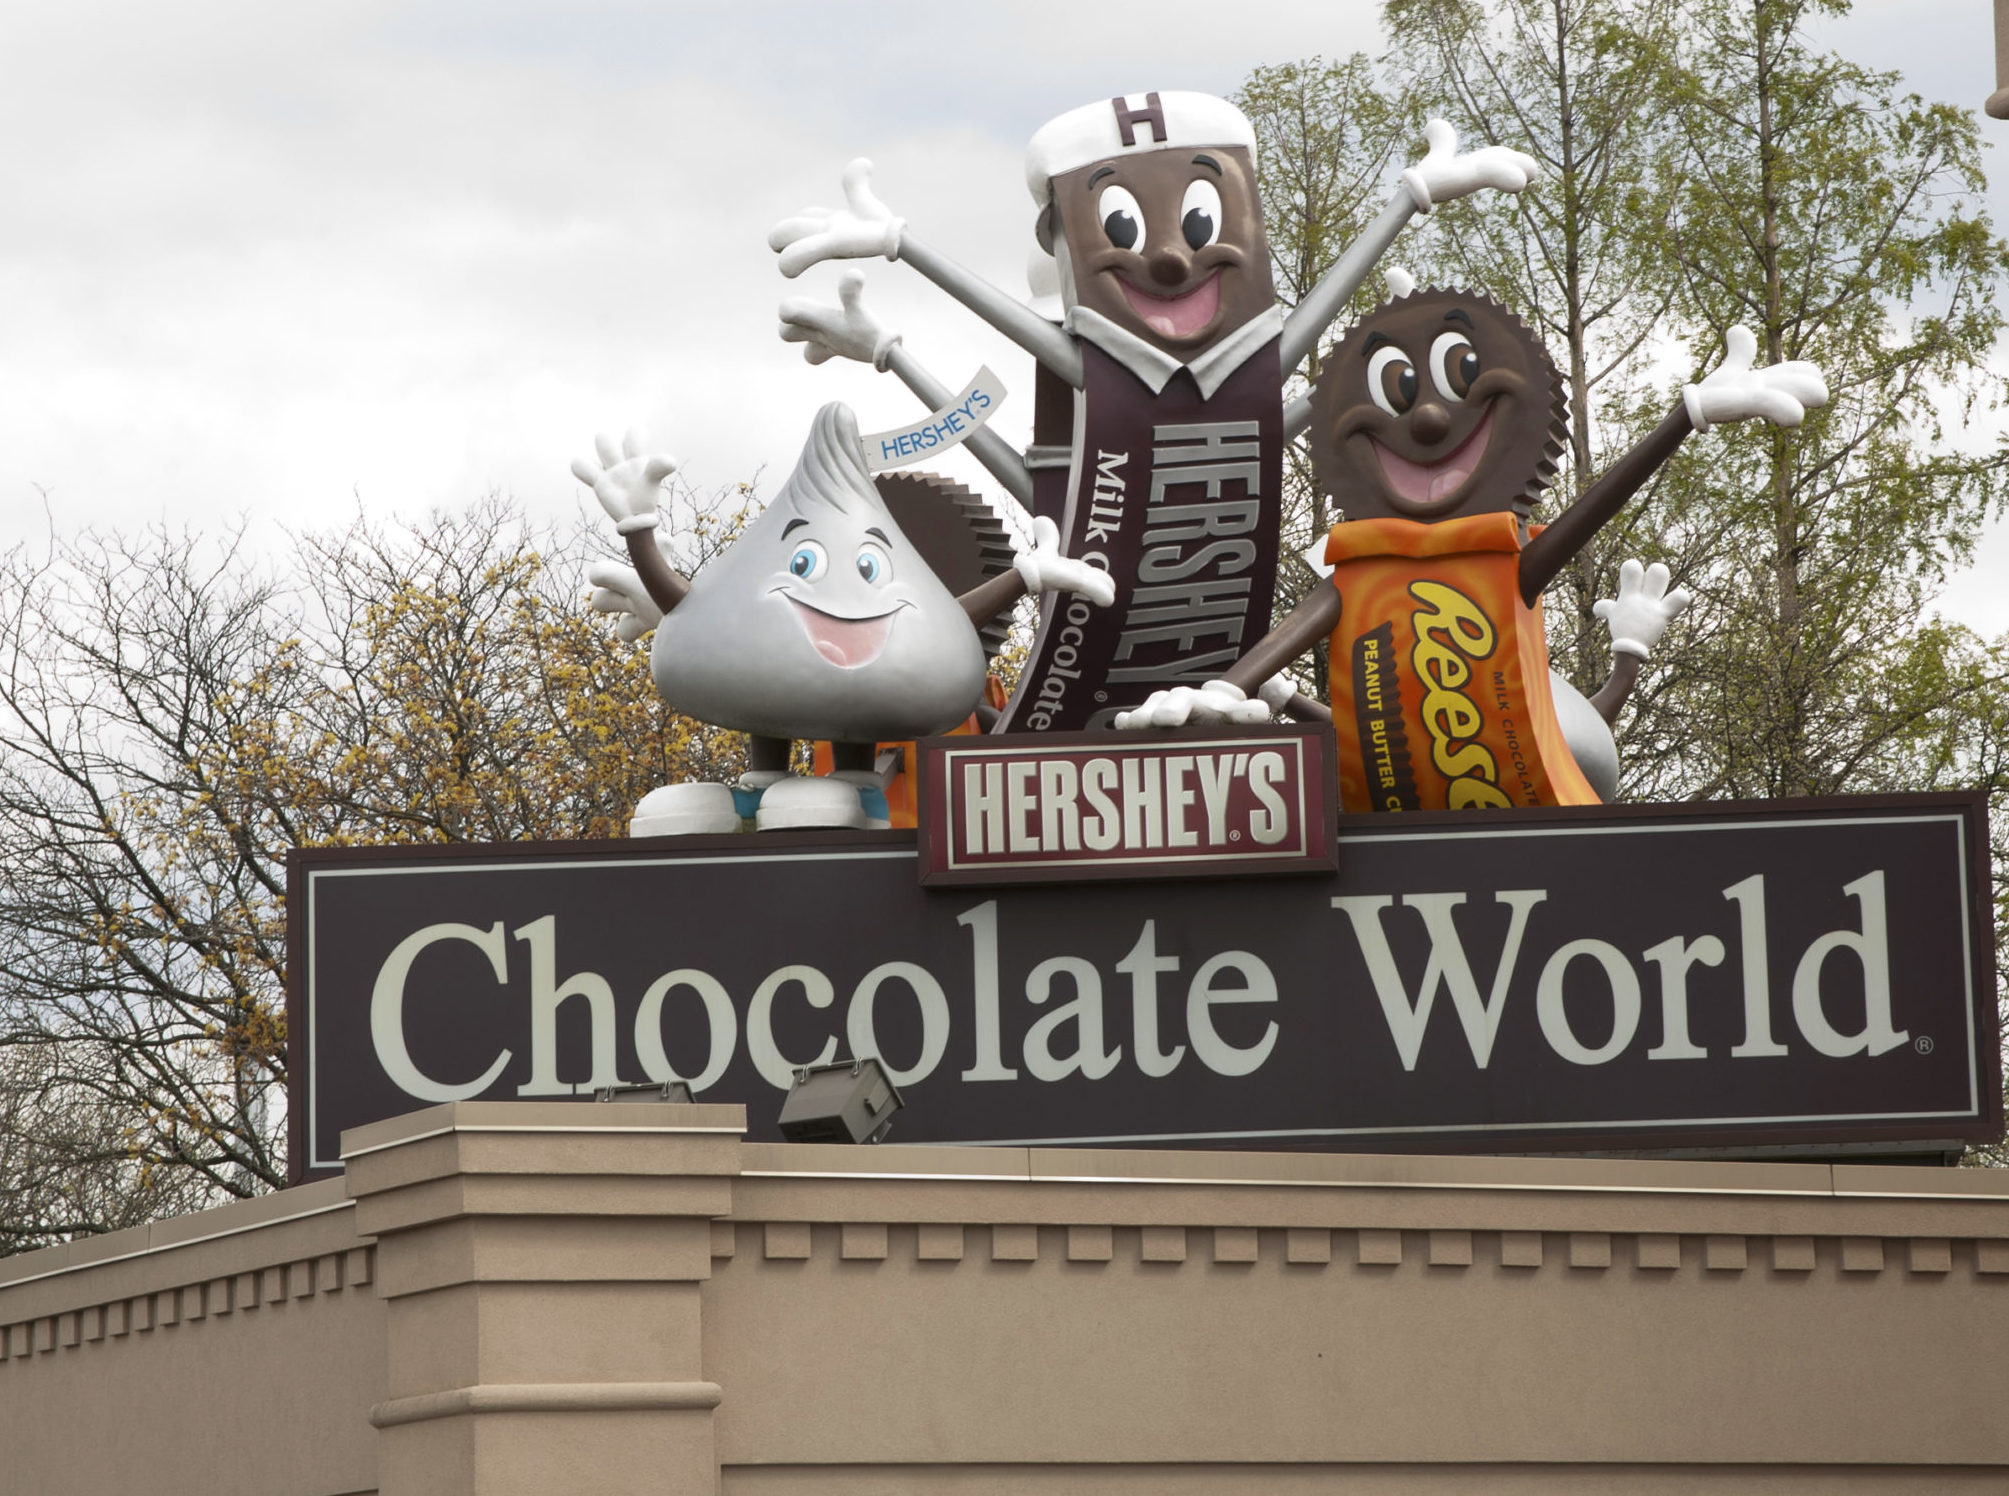 Hershey's Chocolate World. One of the world's top chocolate factories,